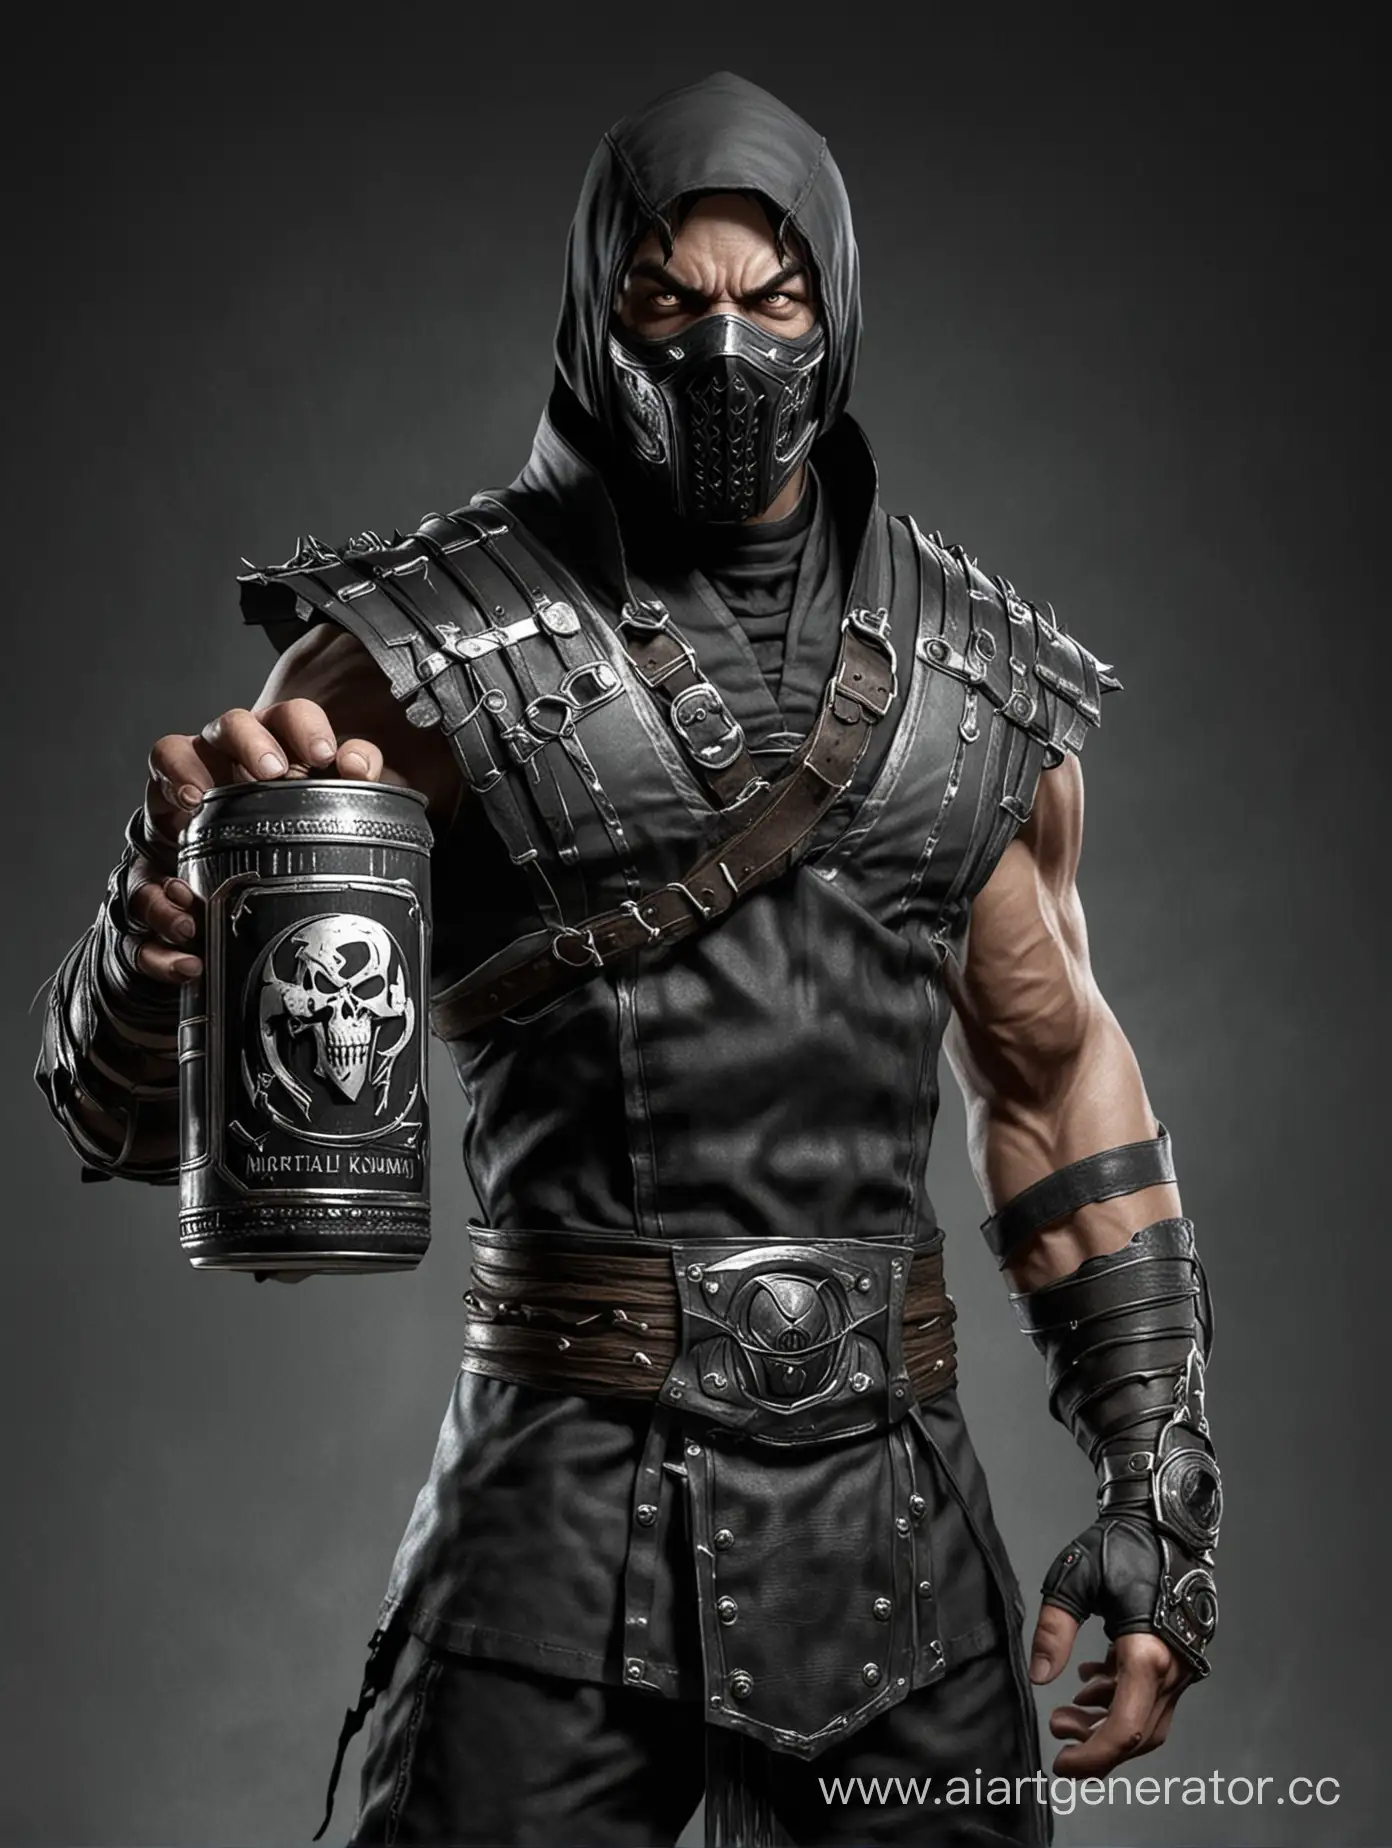 Mortal-Kombat-Character-with-Black-Metal-Can